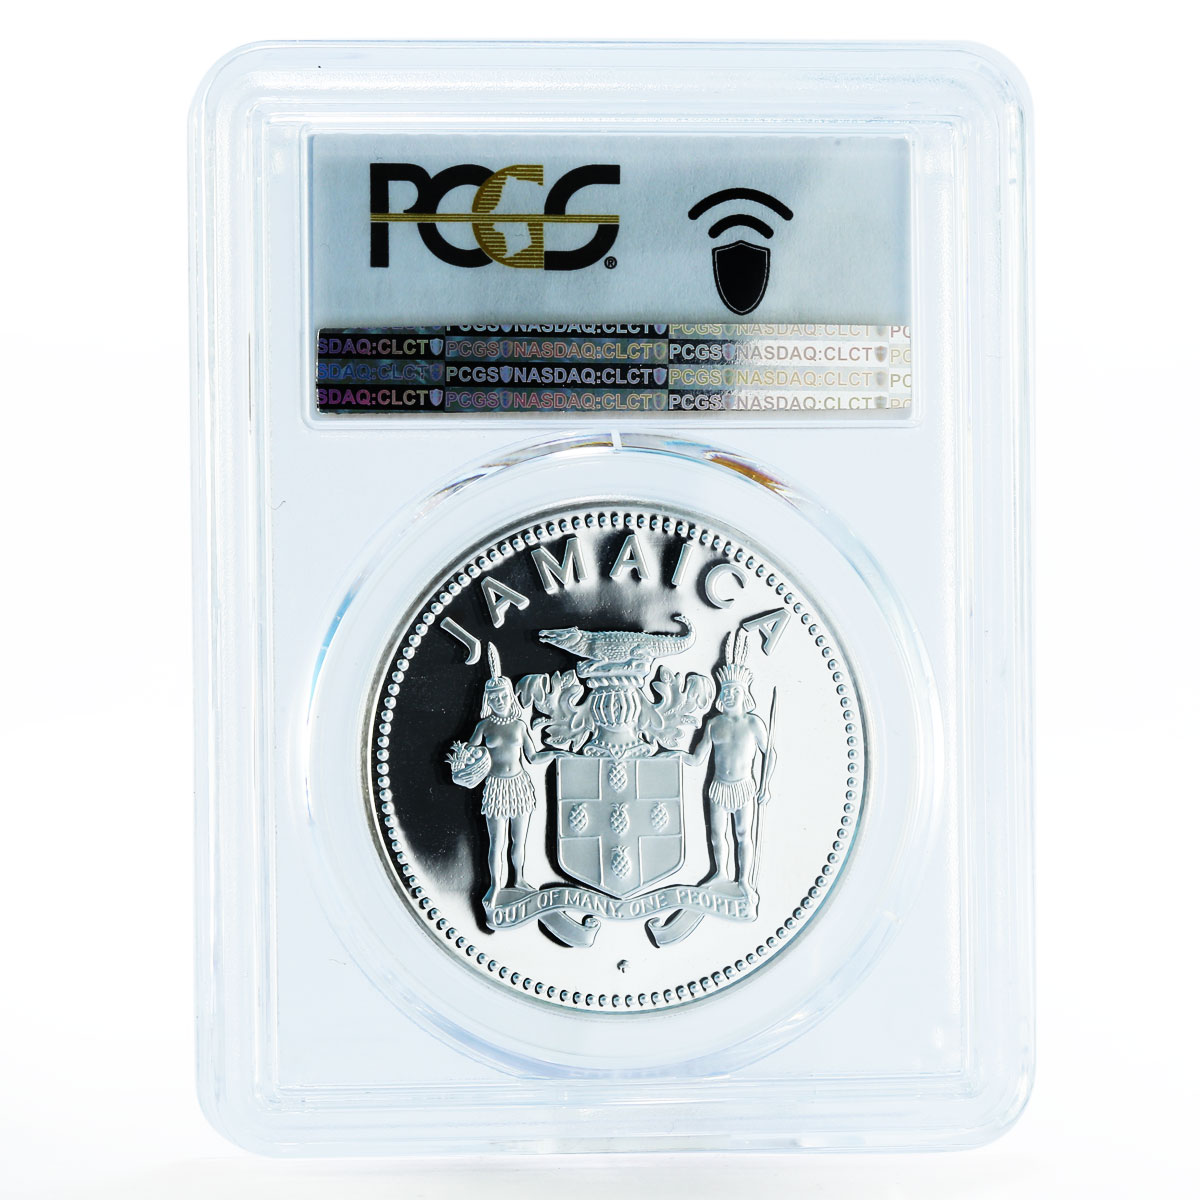 Jamaica 10 dollars Caribbean Development Bank PR70 PCGS sivler coin 1980